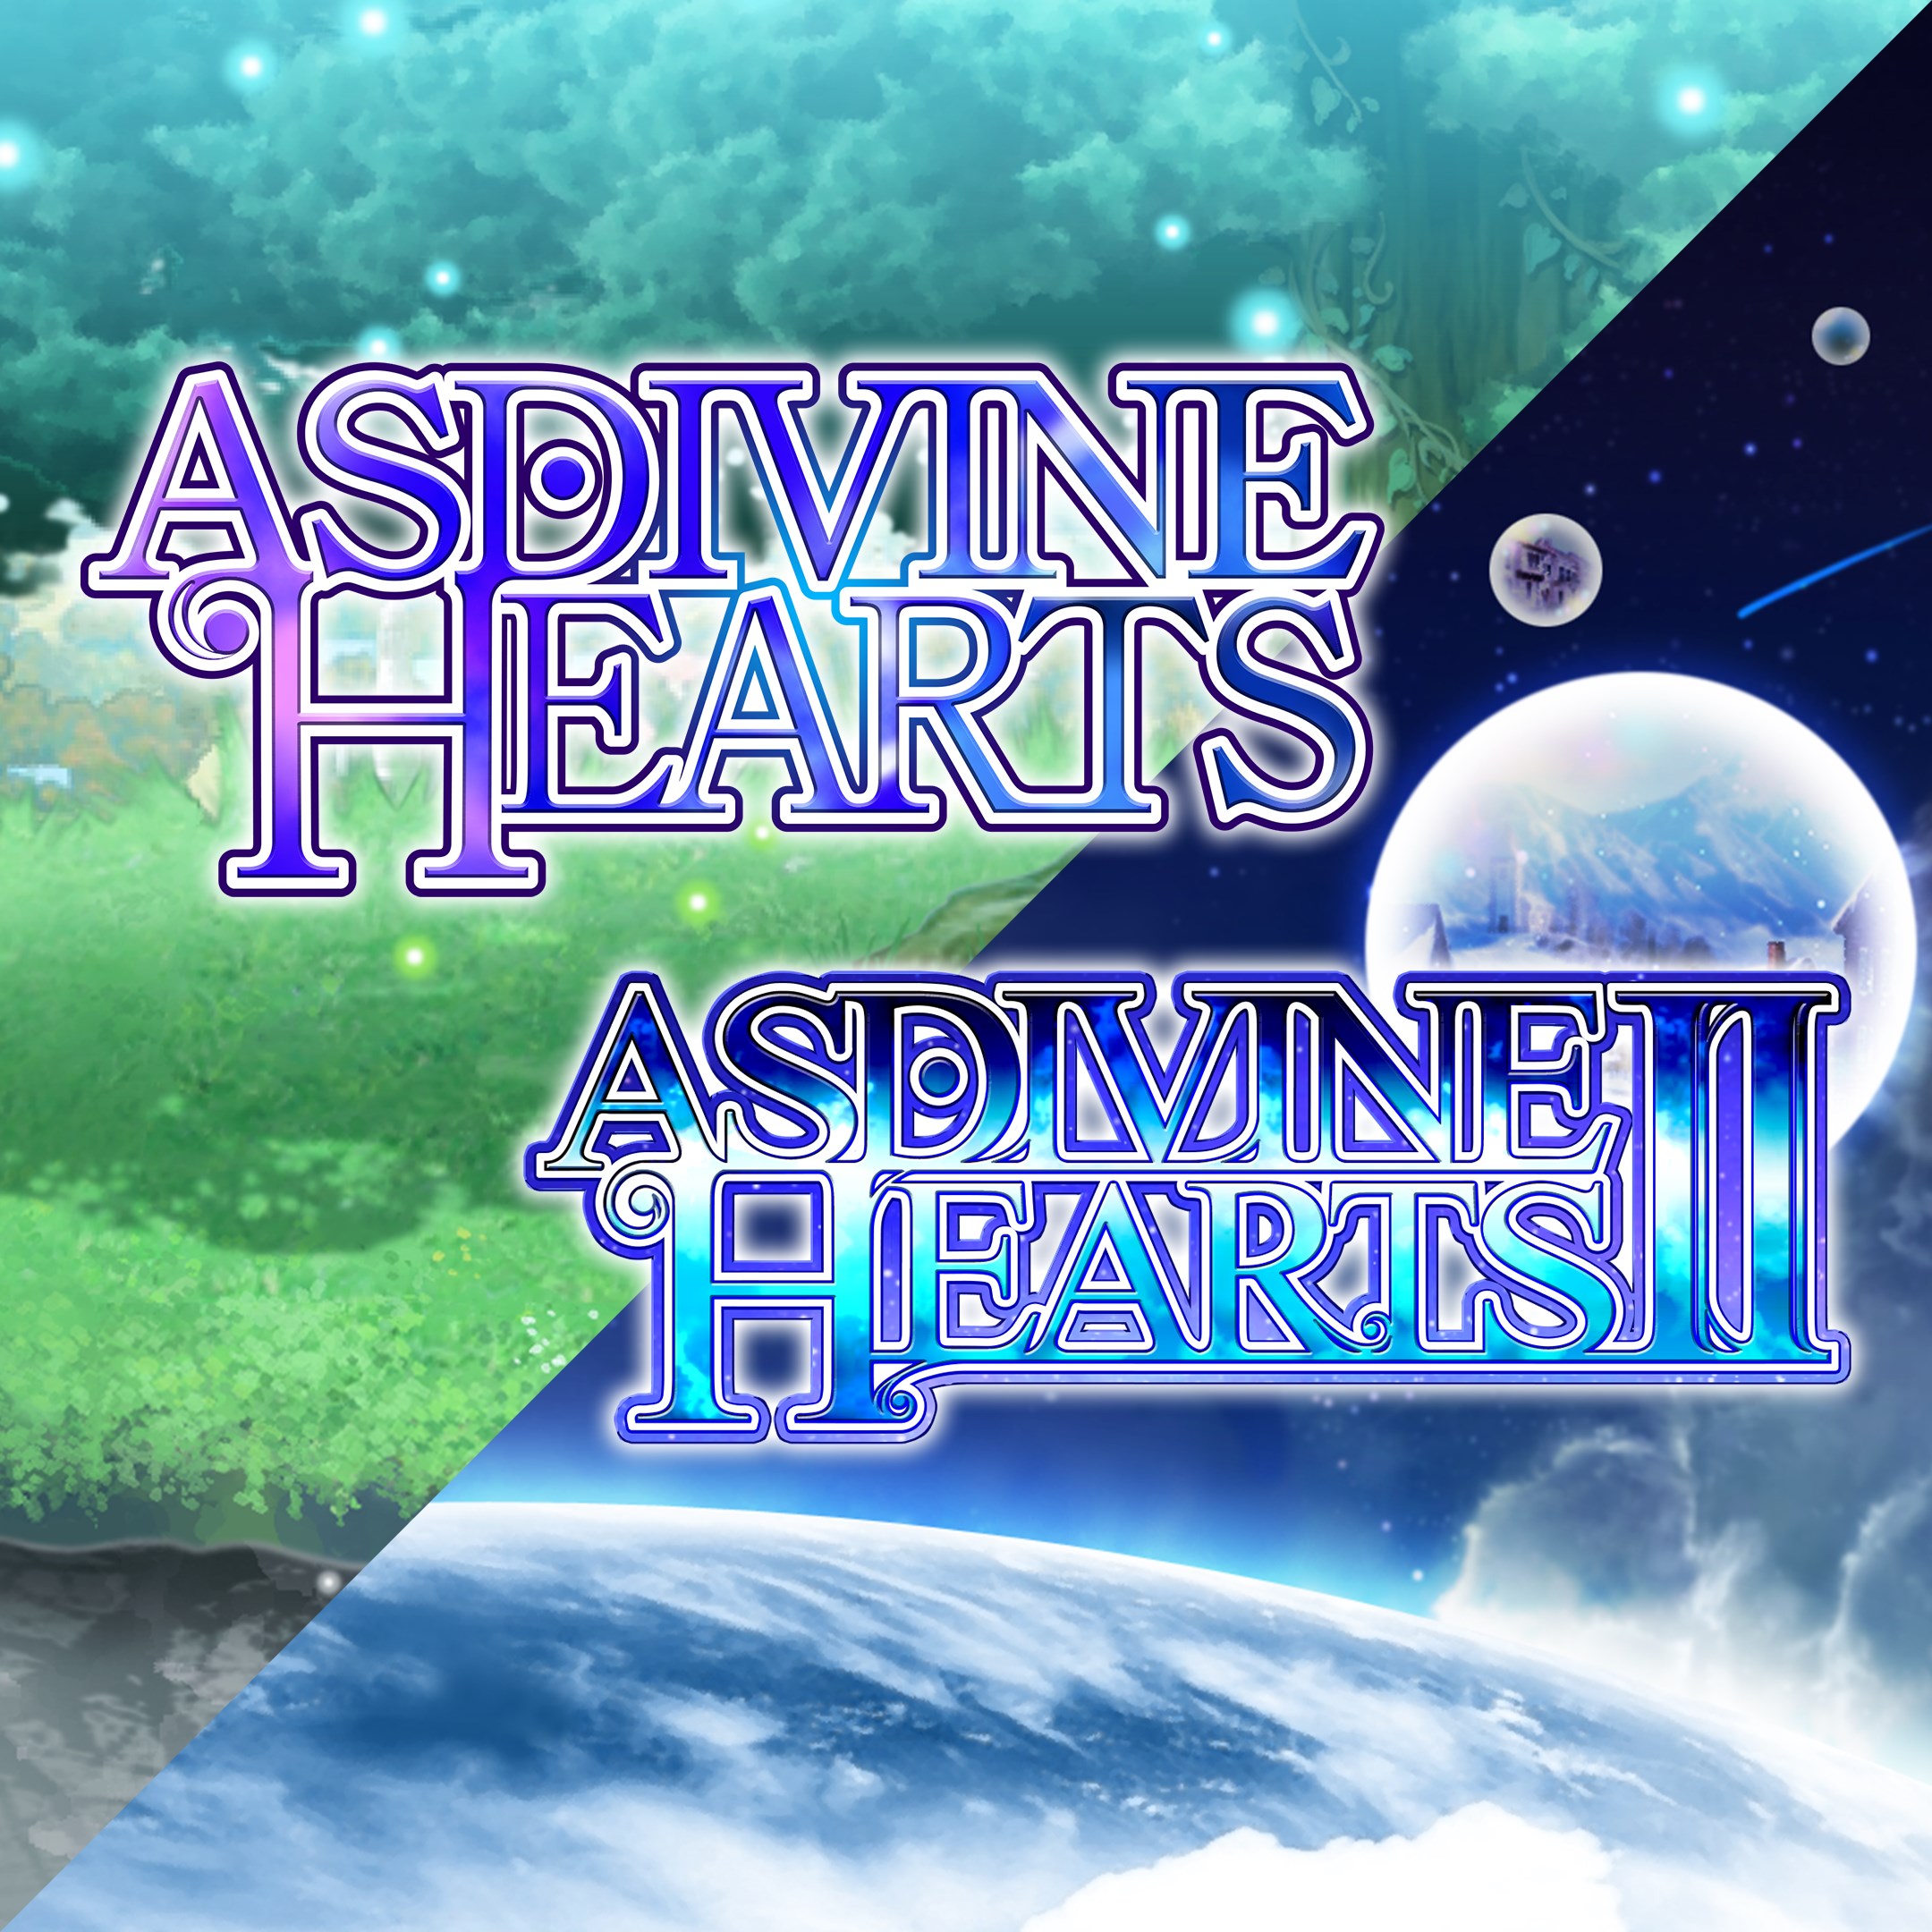 Asdivine Hearts I & II